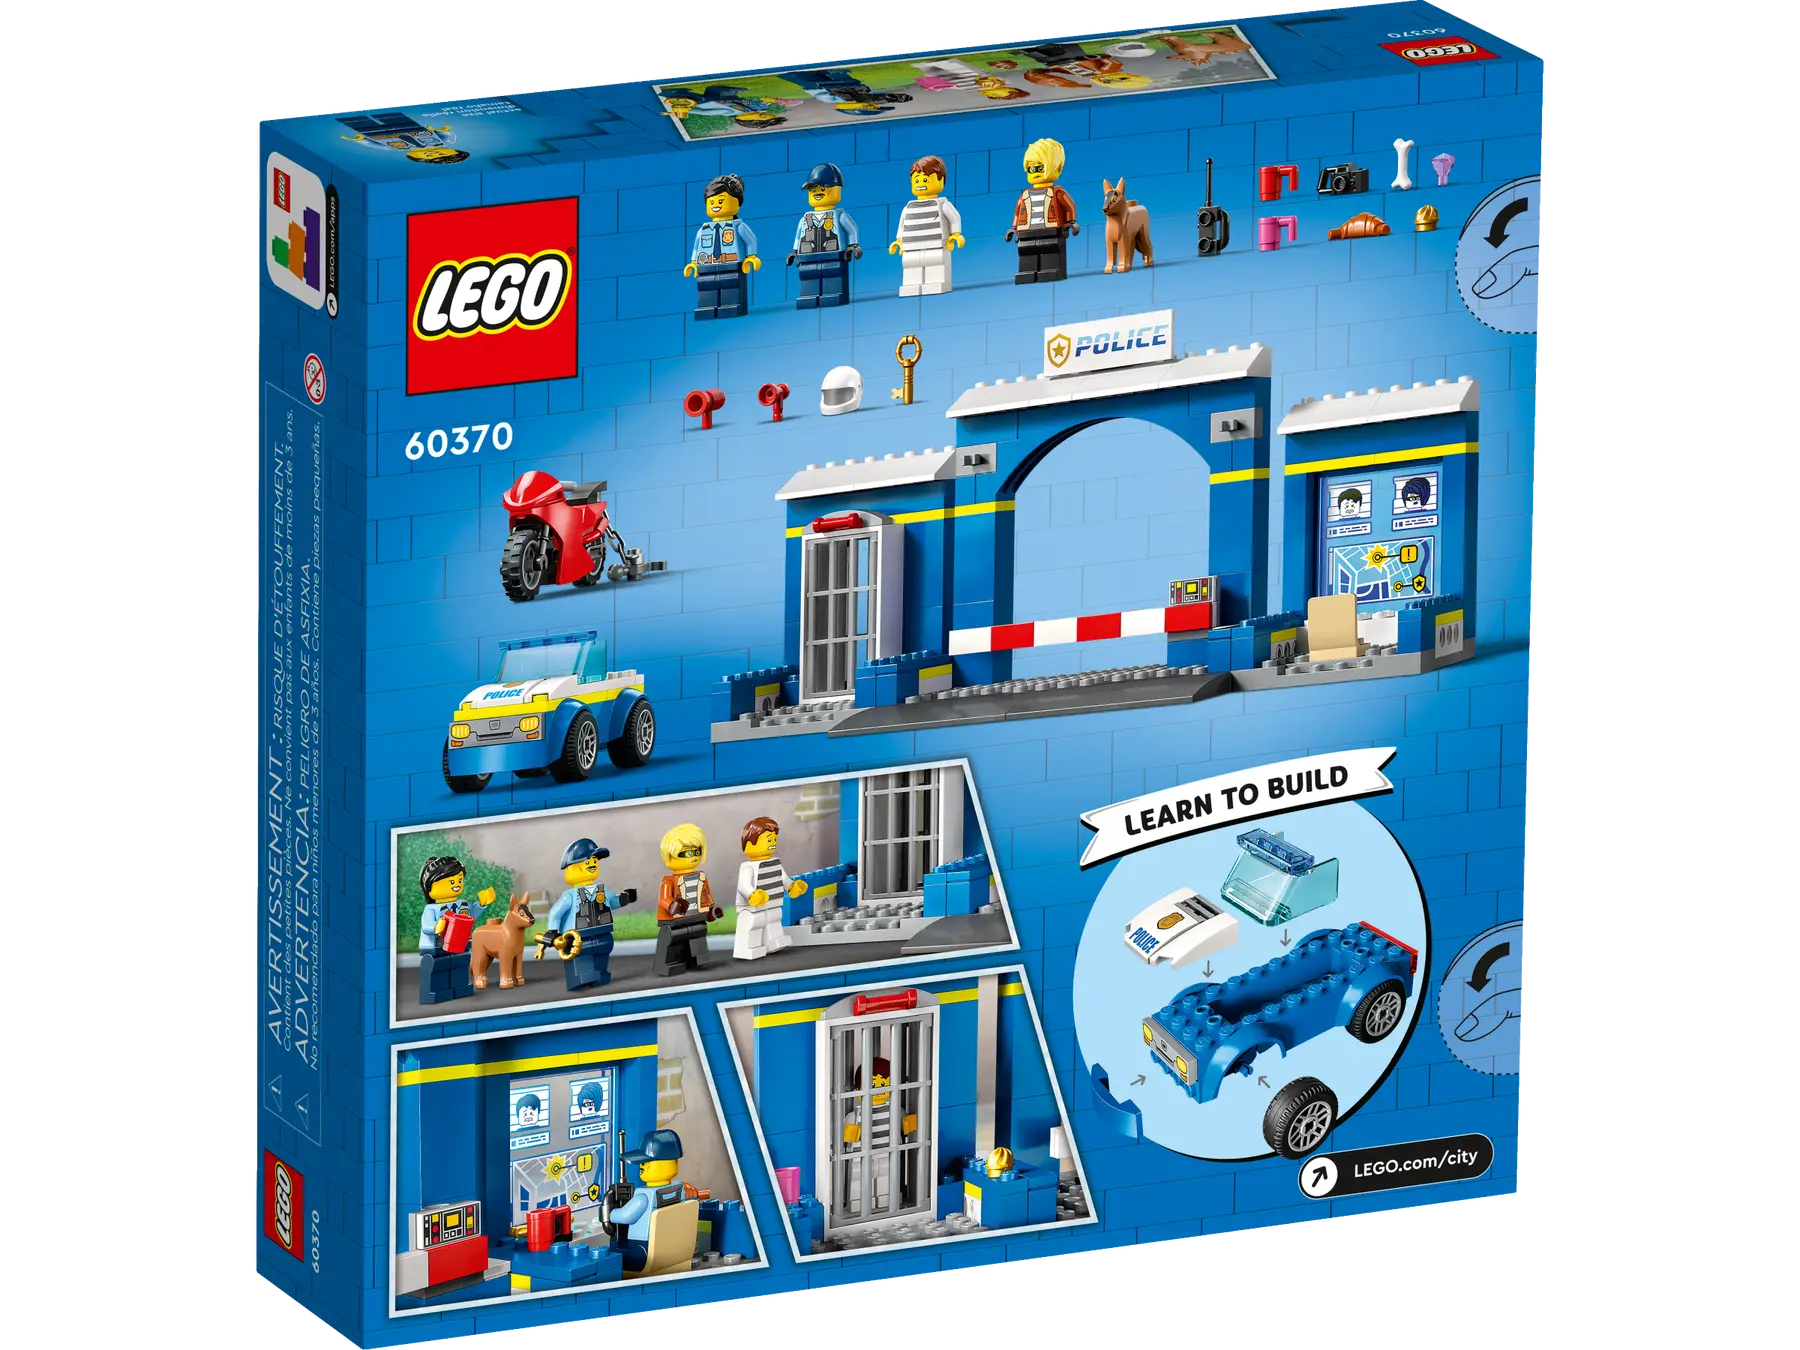 Lego City - Police Station Chase